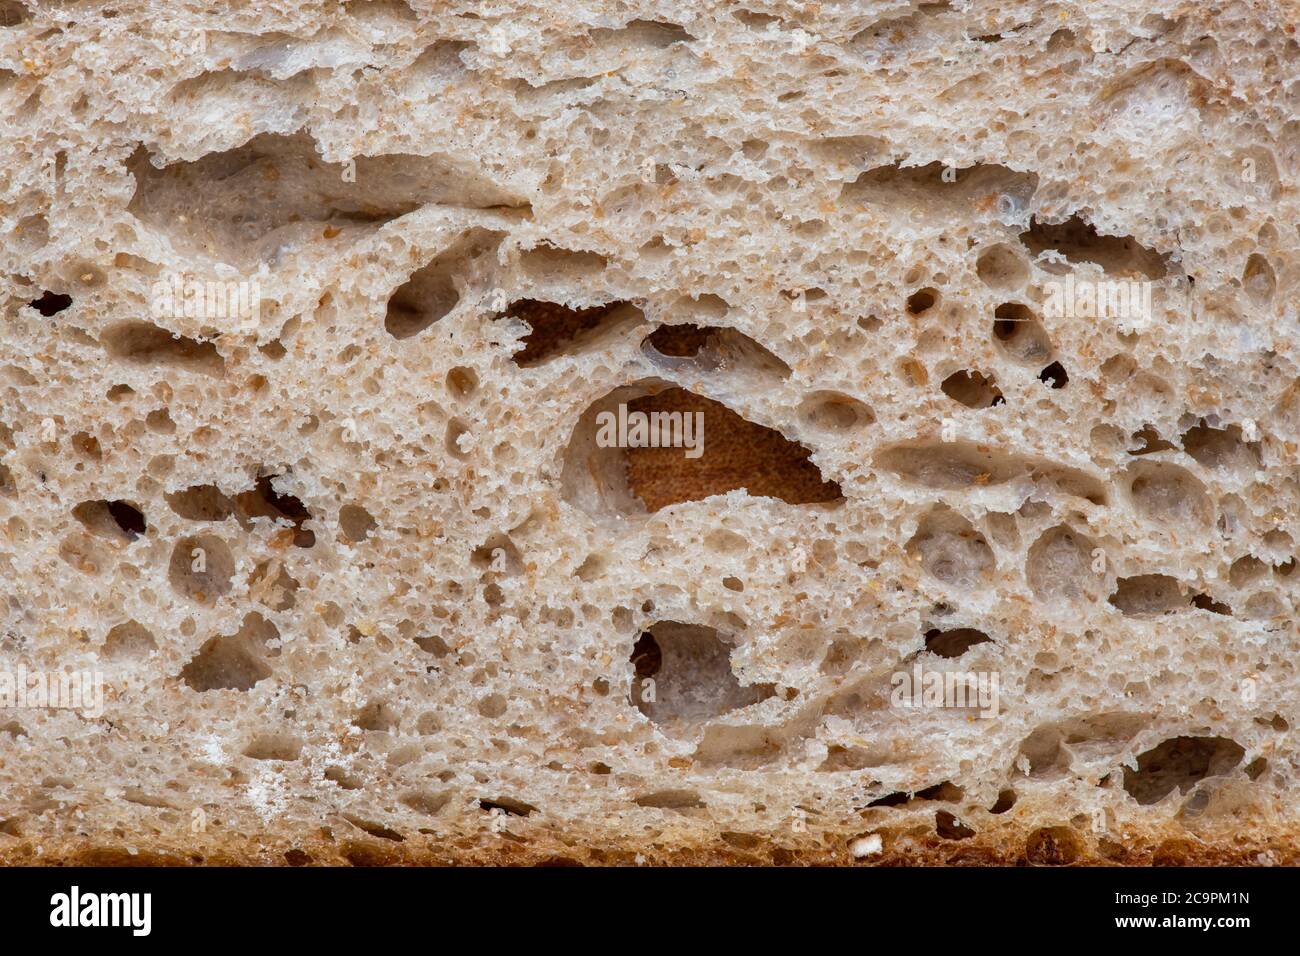 Pane a lievitazione naturale Foto Stock